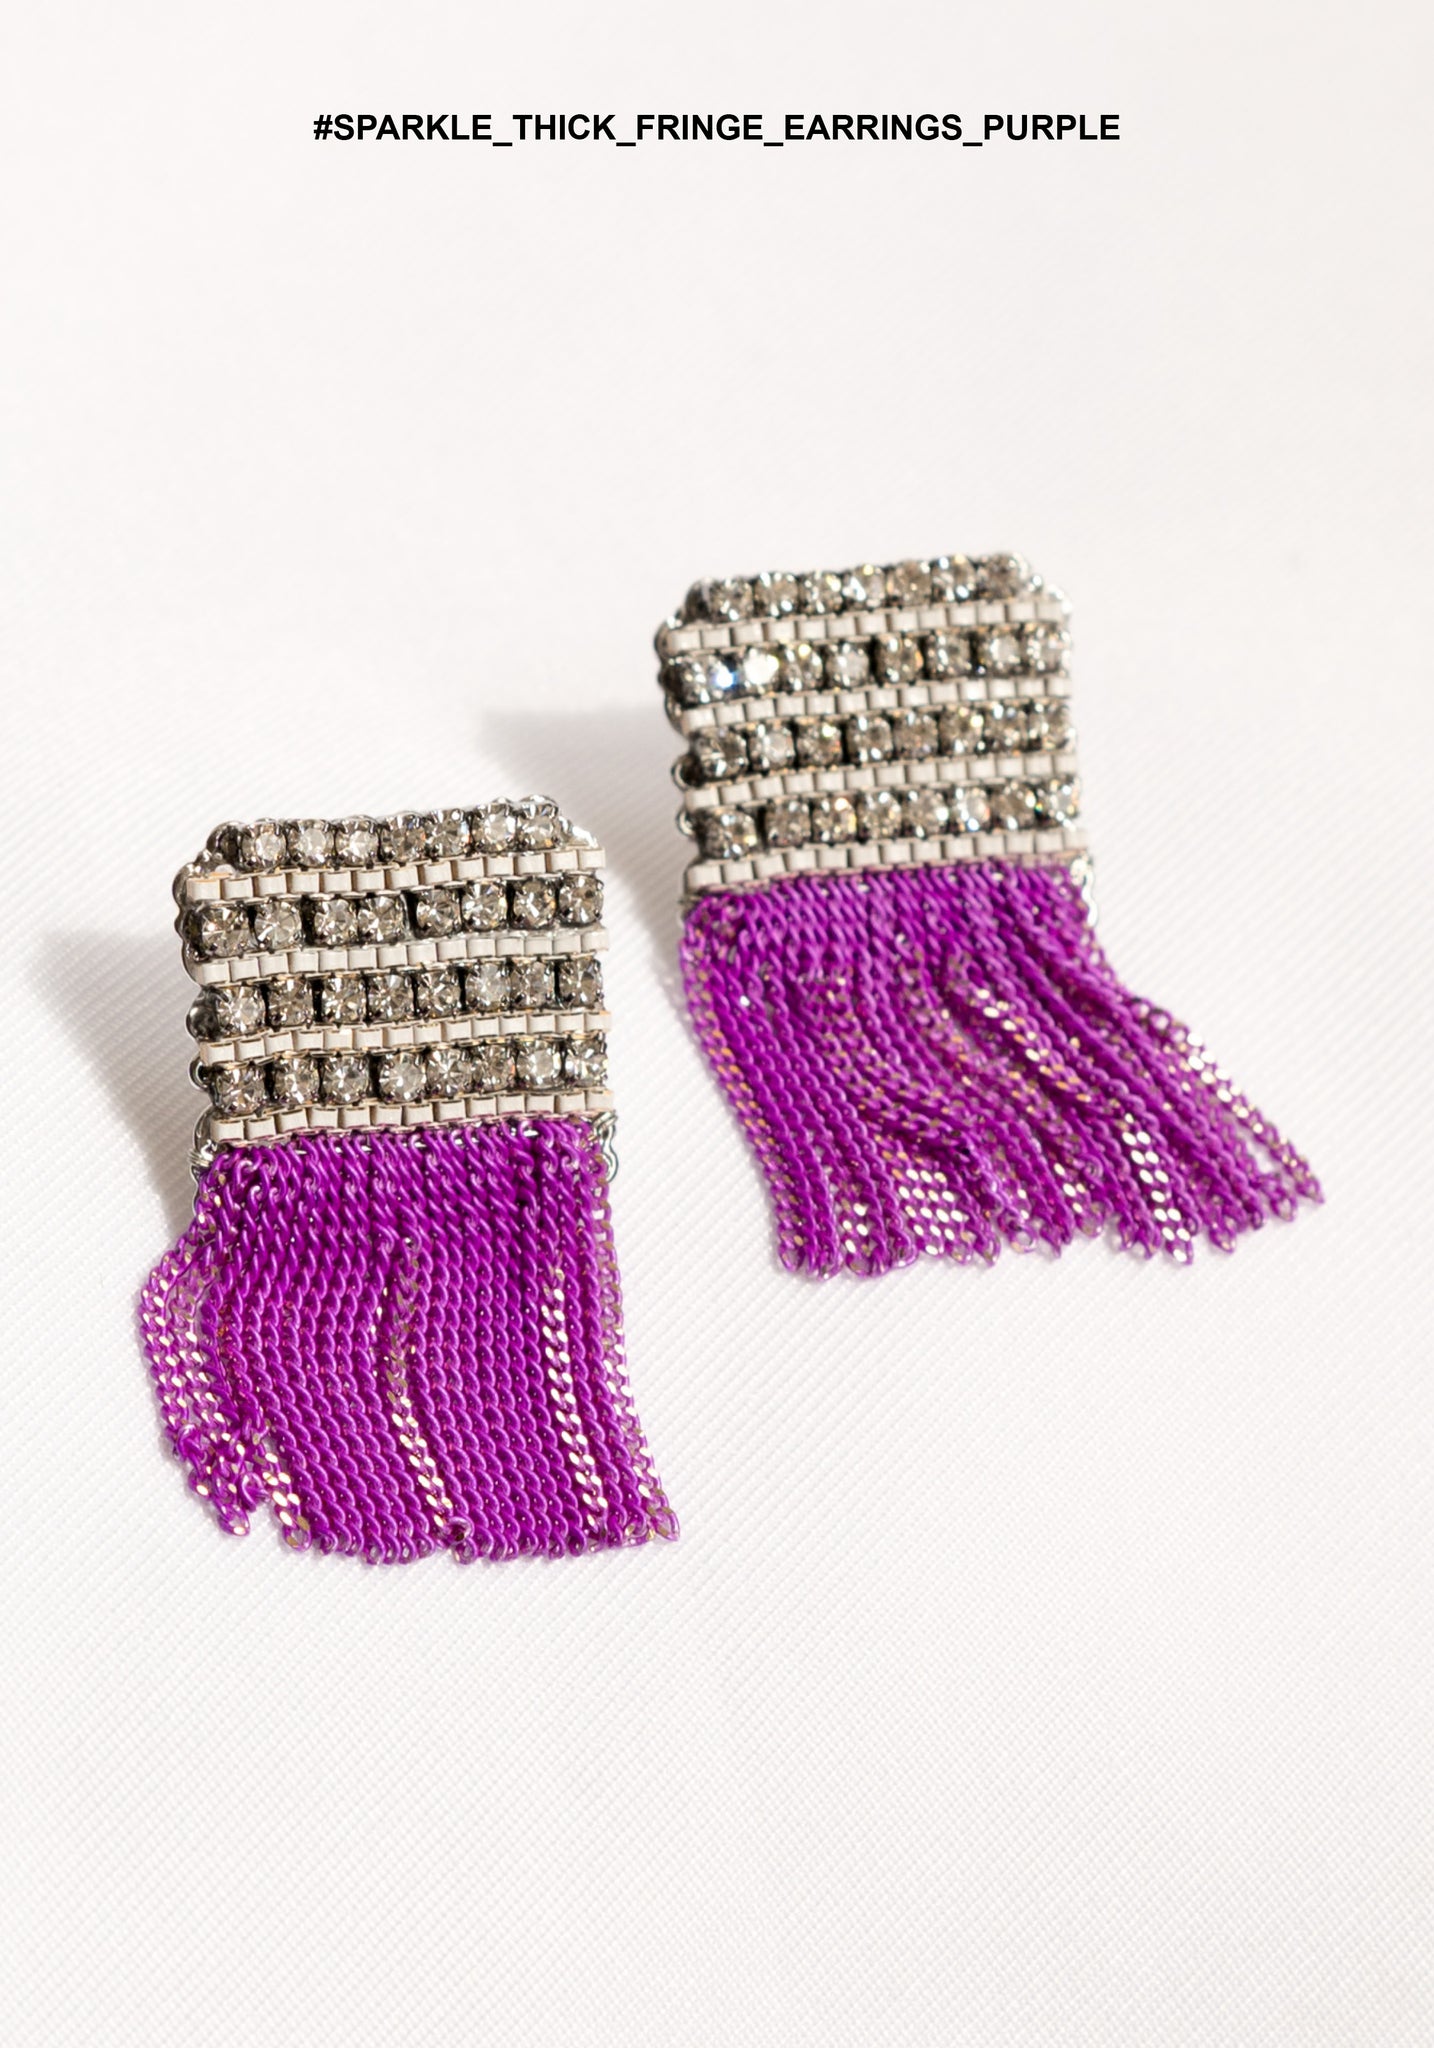 Sparkle Thick Fringe Earrings Purple - whoami